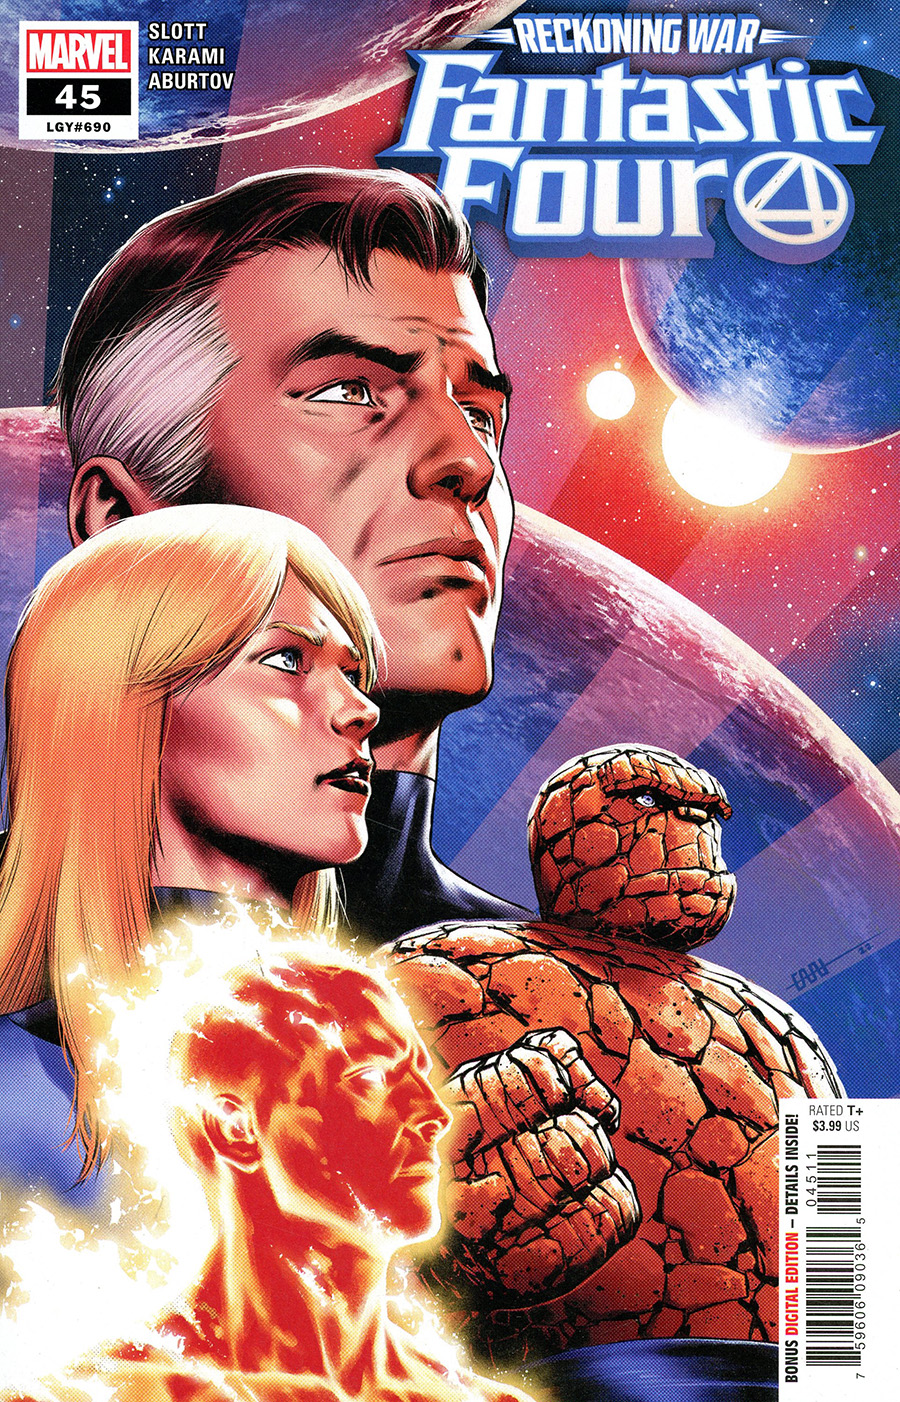 Fantastic Four Vol 6 #45 Cover A Regular CAFU Cover (Reckoning War Tie-In)